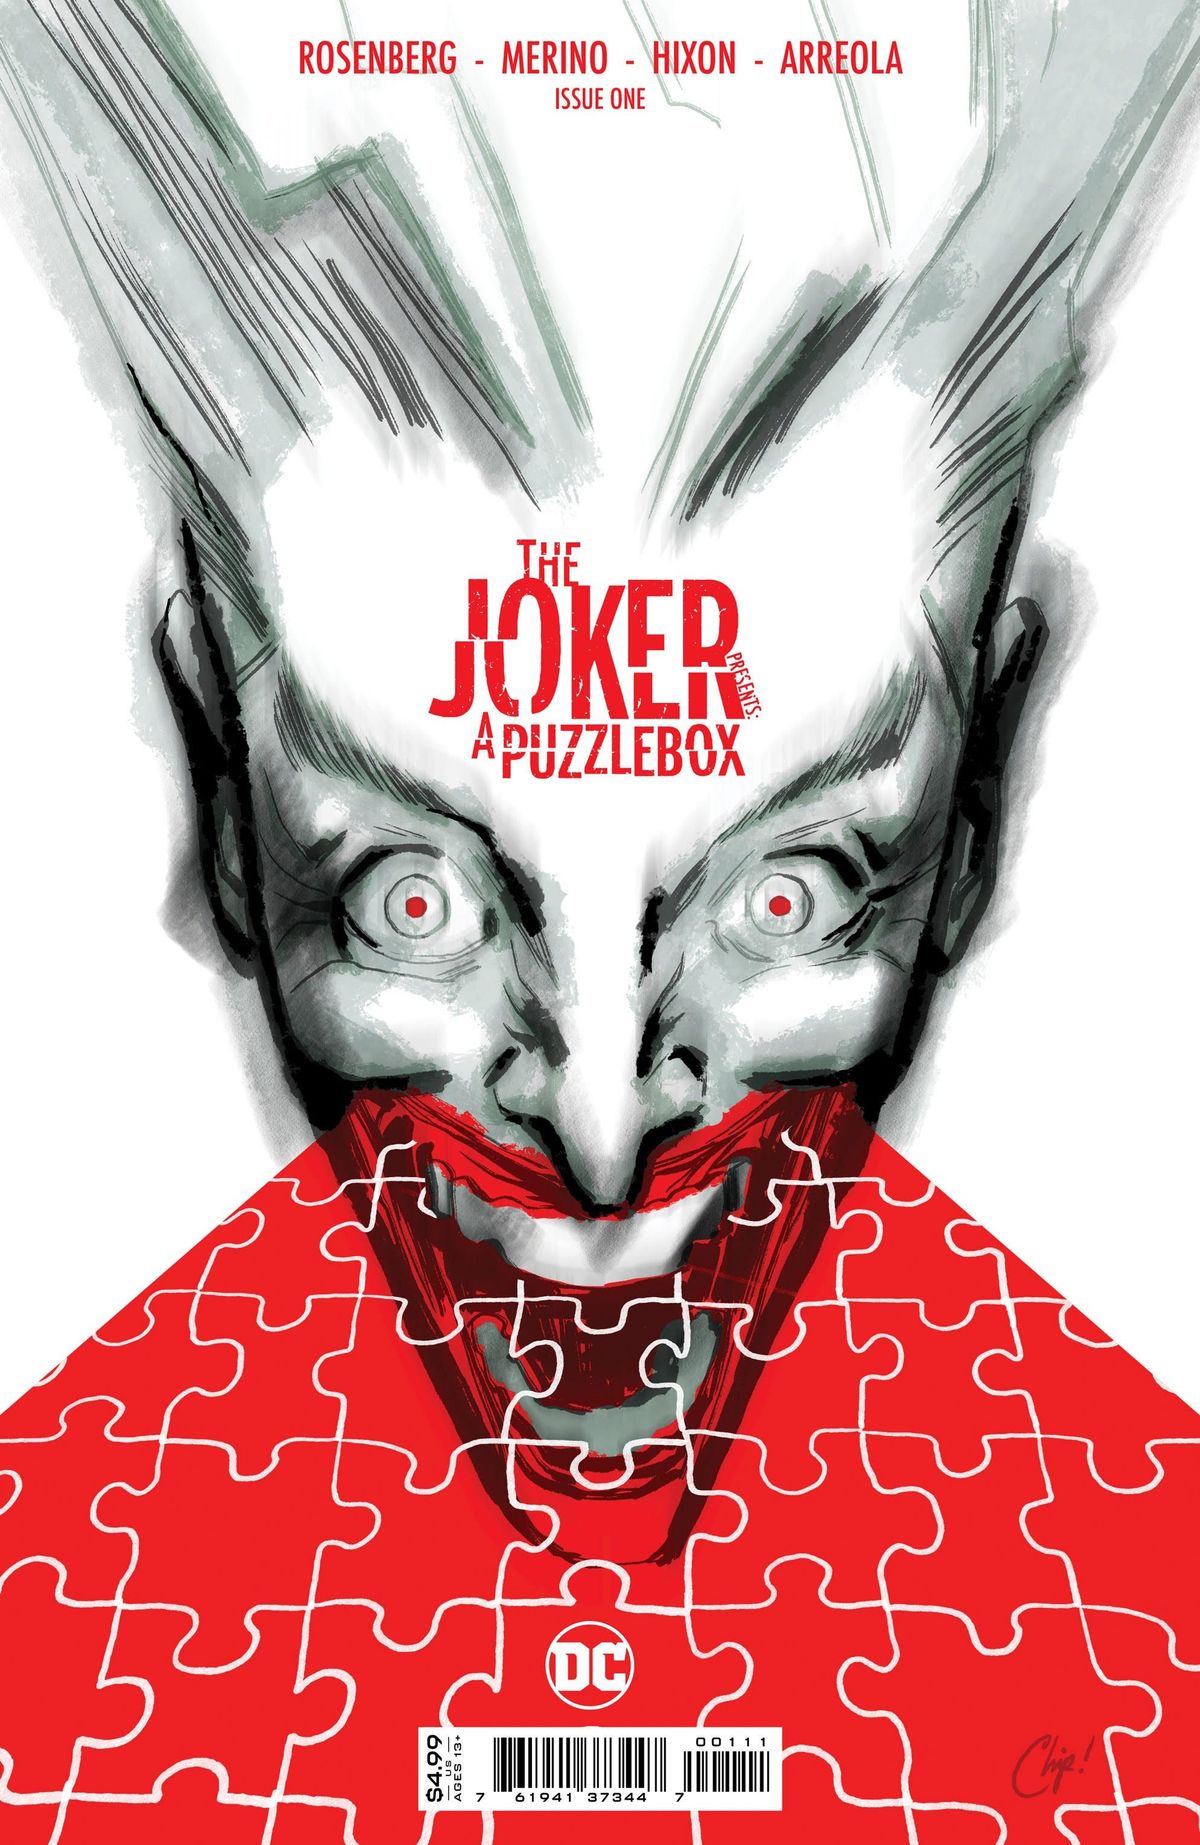 DC tillkännager Murder Mystery Series med Joker som Star Witness